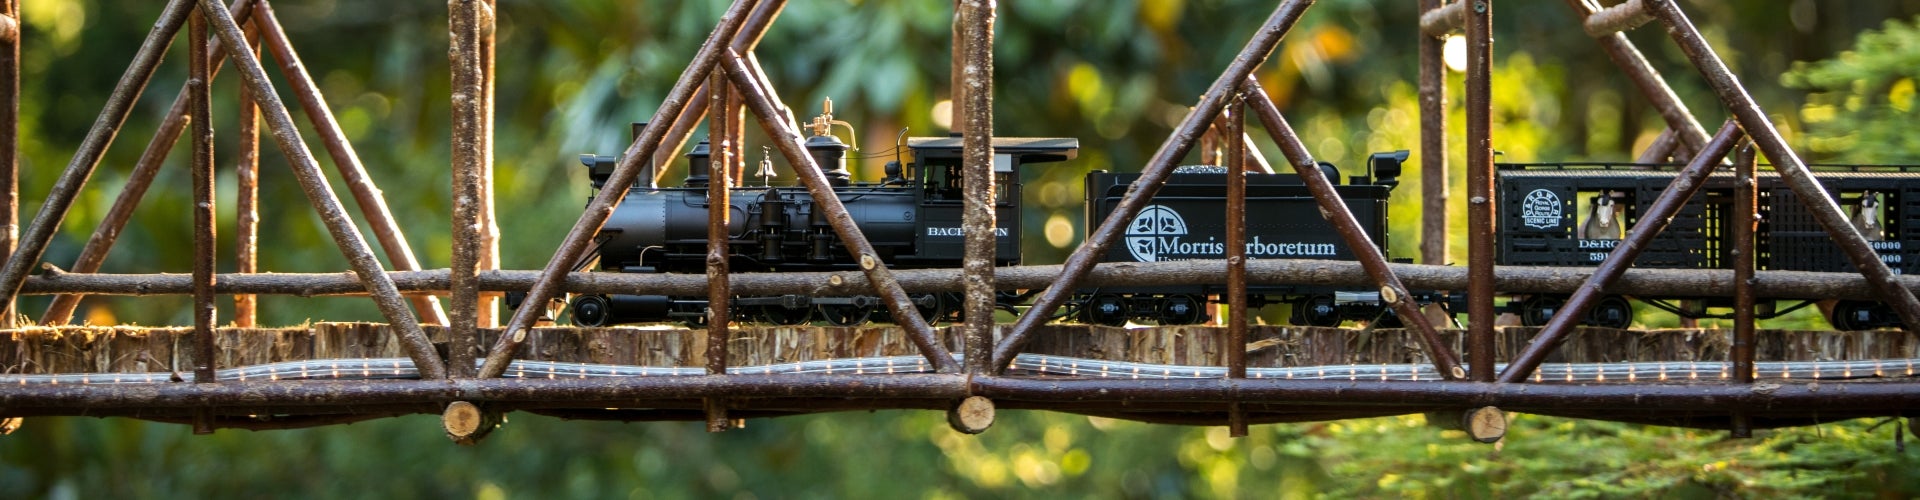 A model train rides through a wooden tressle.